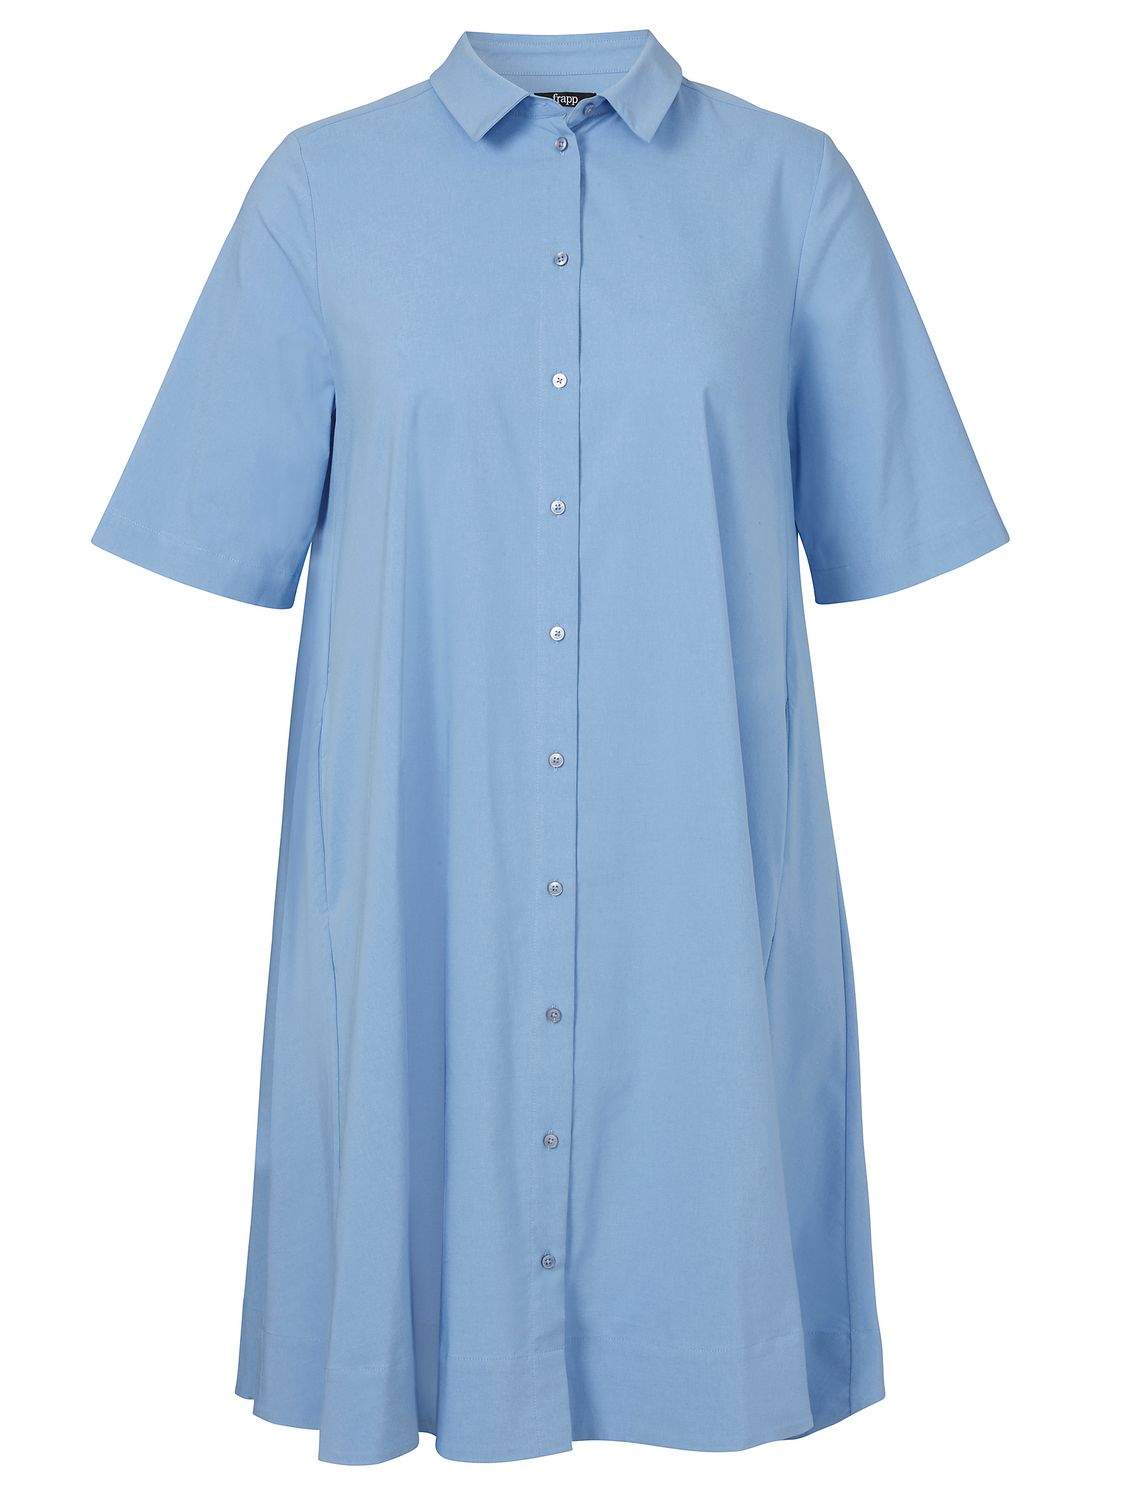 Frapp jurk blauw 2453672